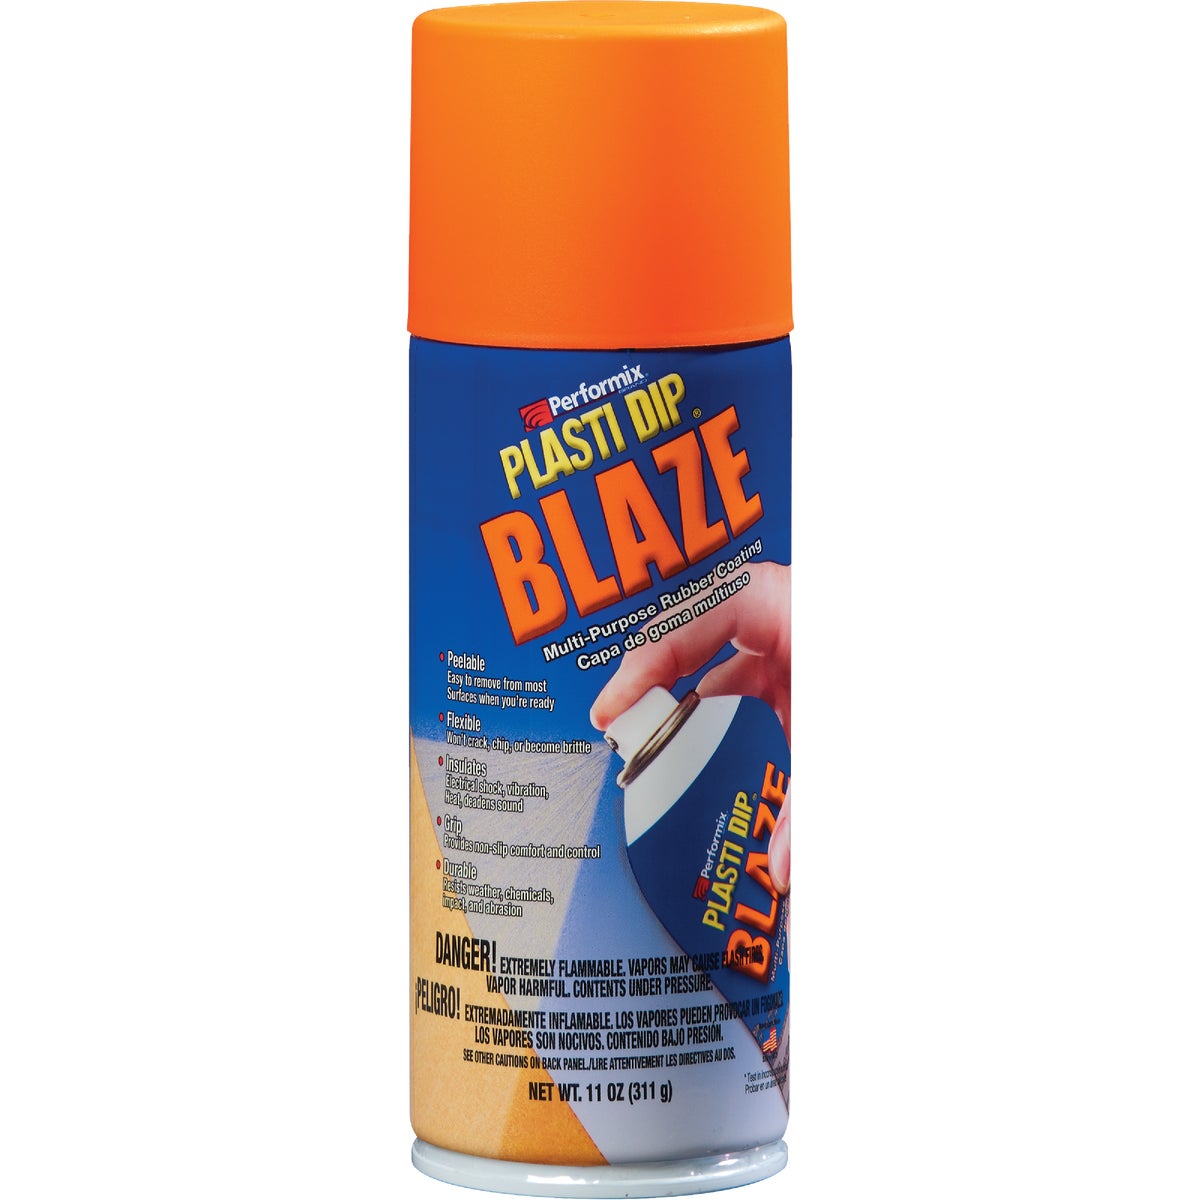 Performix Plasti Dip Orange Blaze Rubber Coating Spray Paint